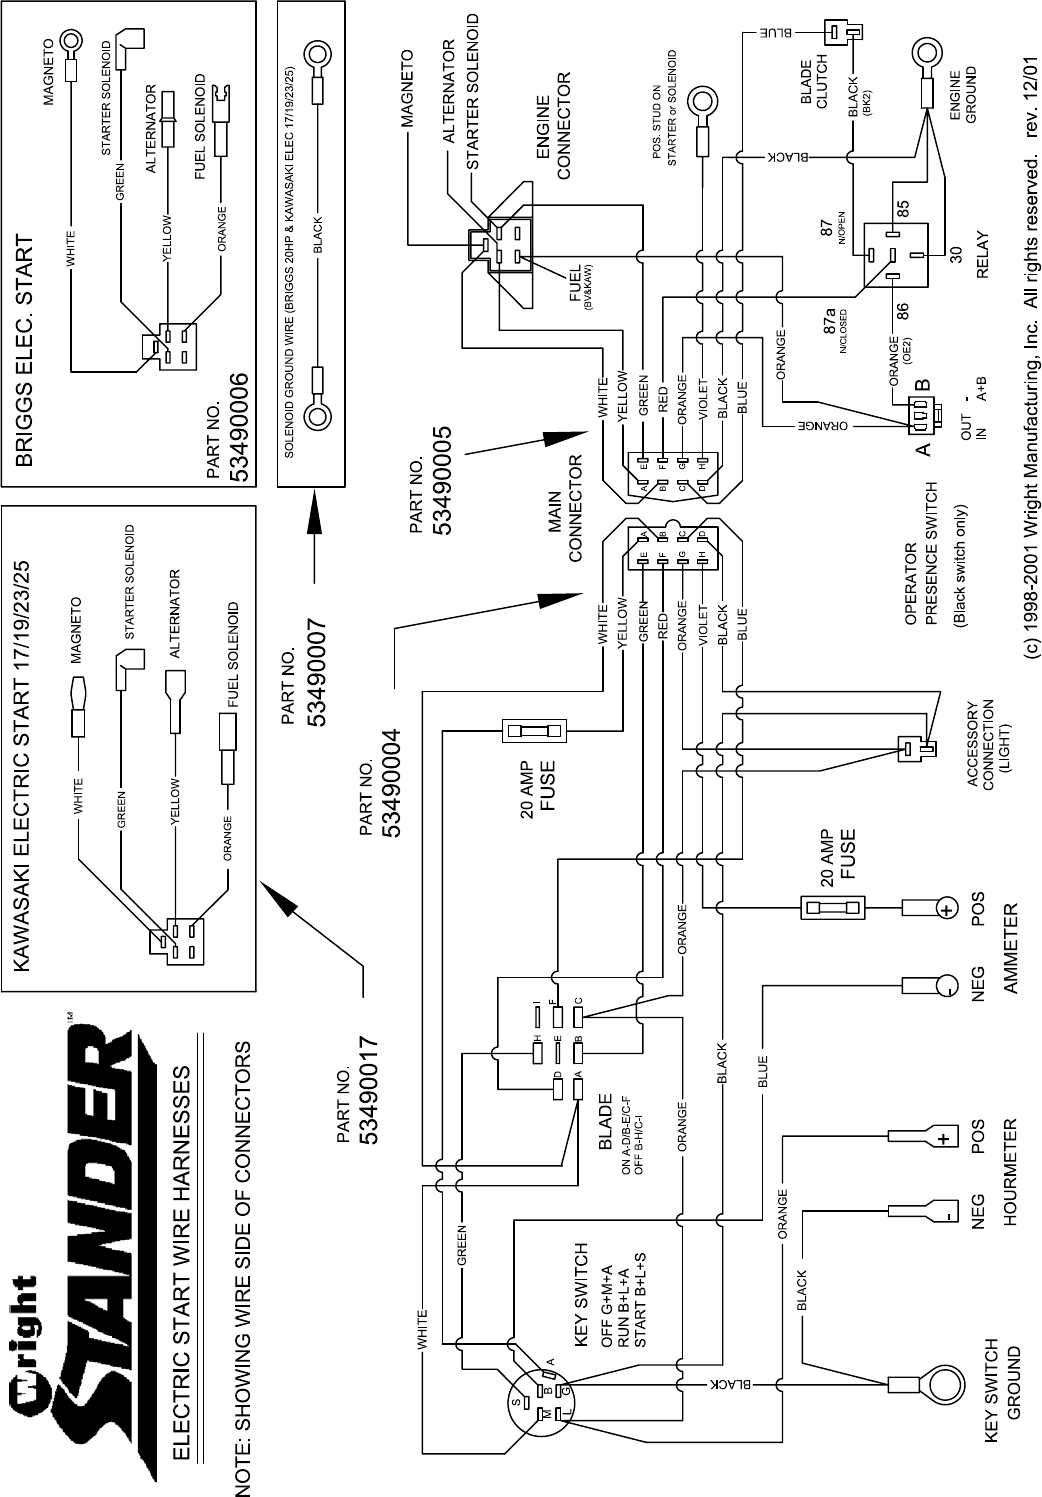 wright stander wiring diagram Wiring Diagram